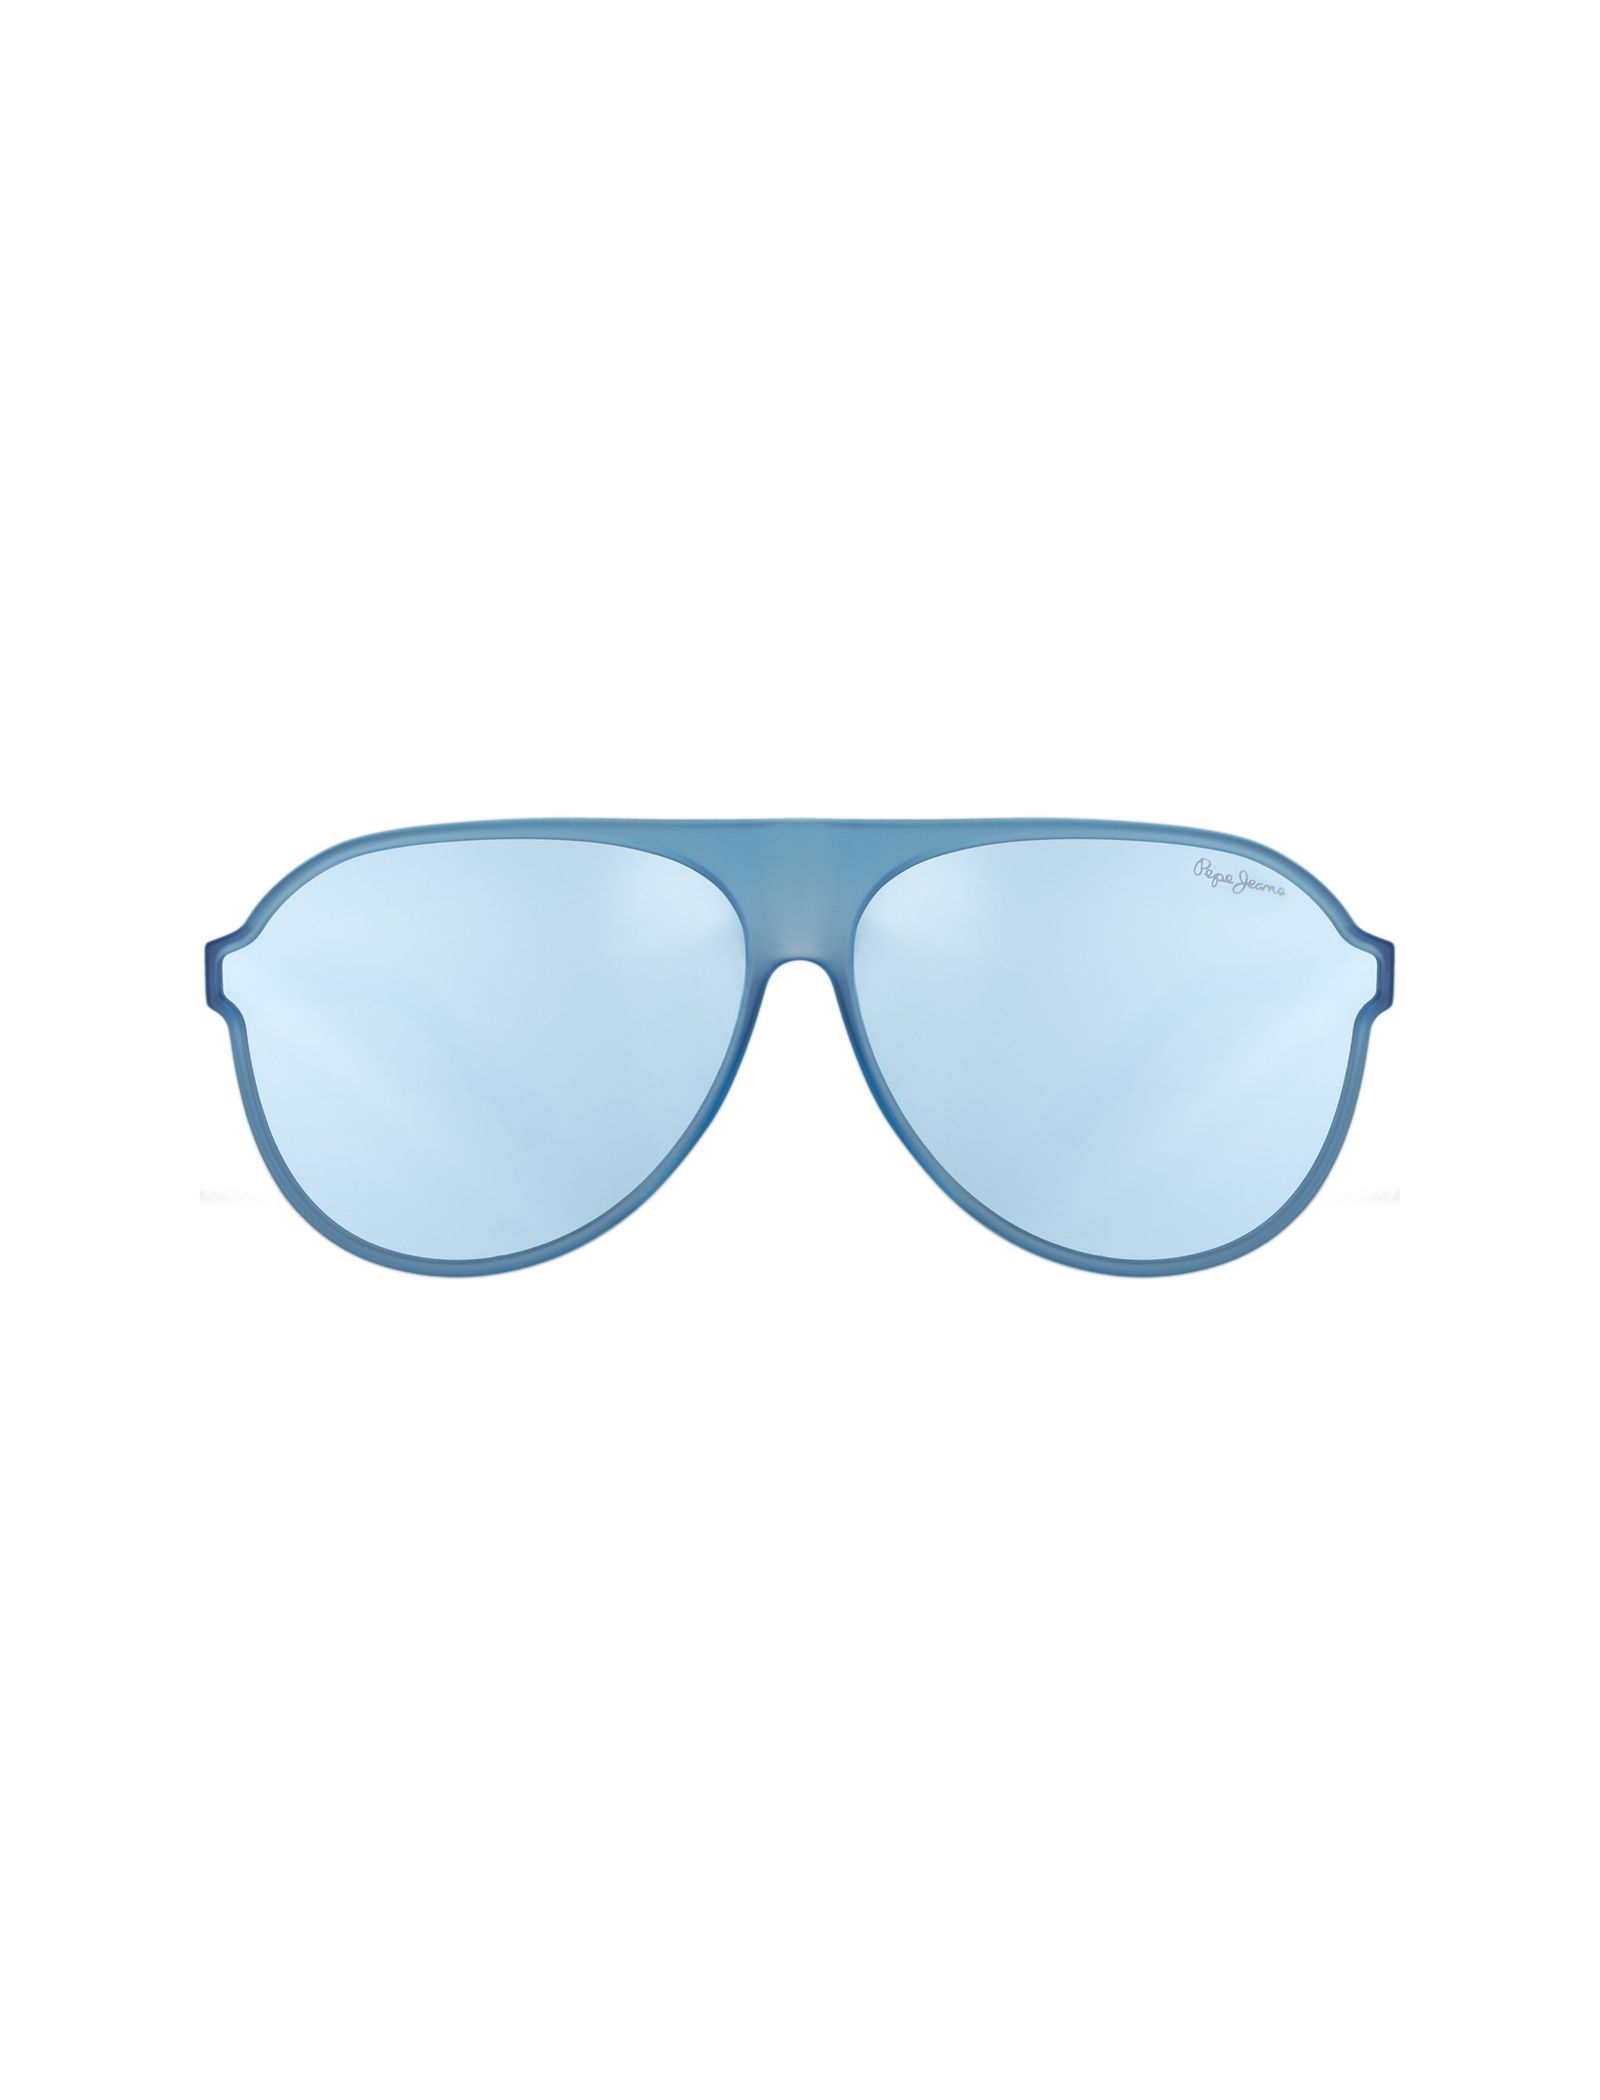 عینک آفتابی خلبانی زنانه - پپه جینز - آبي روشن - 1